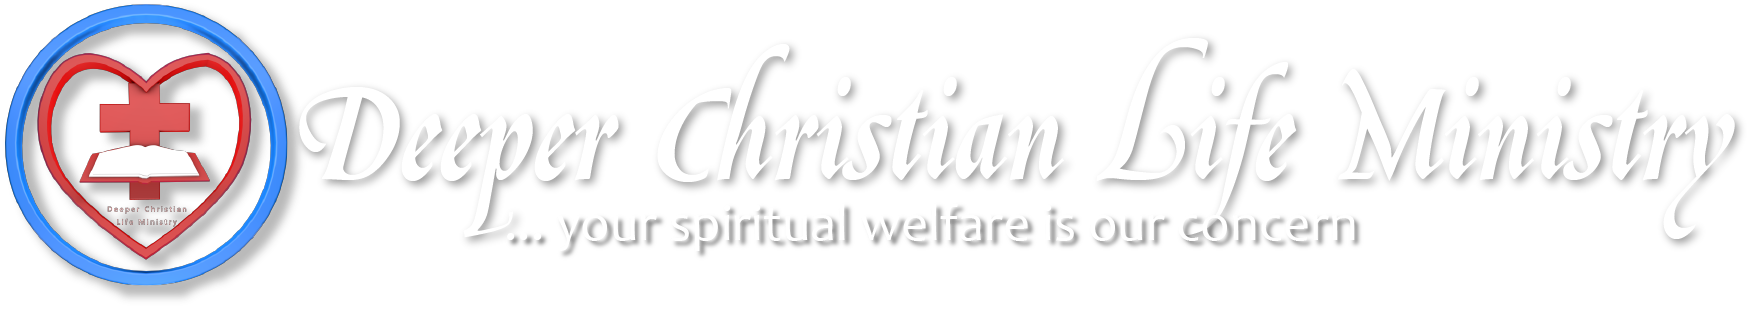 Deeper Christian Life Ministry, Vanuatu